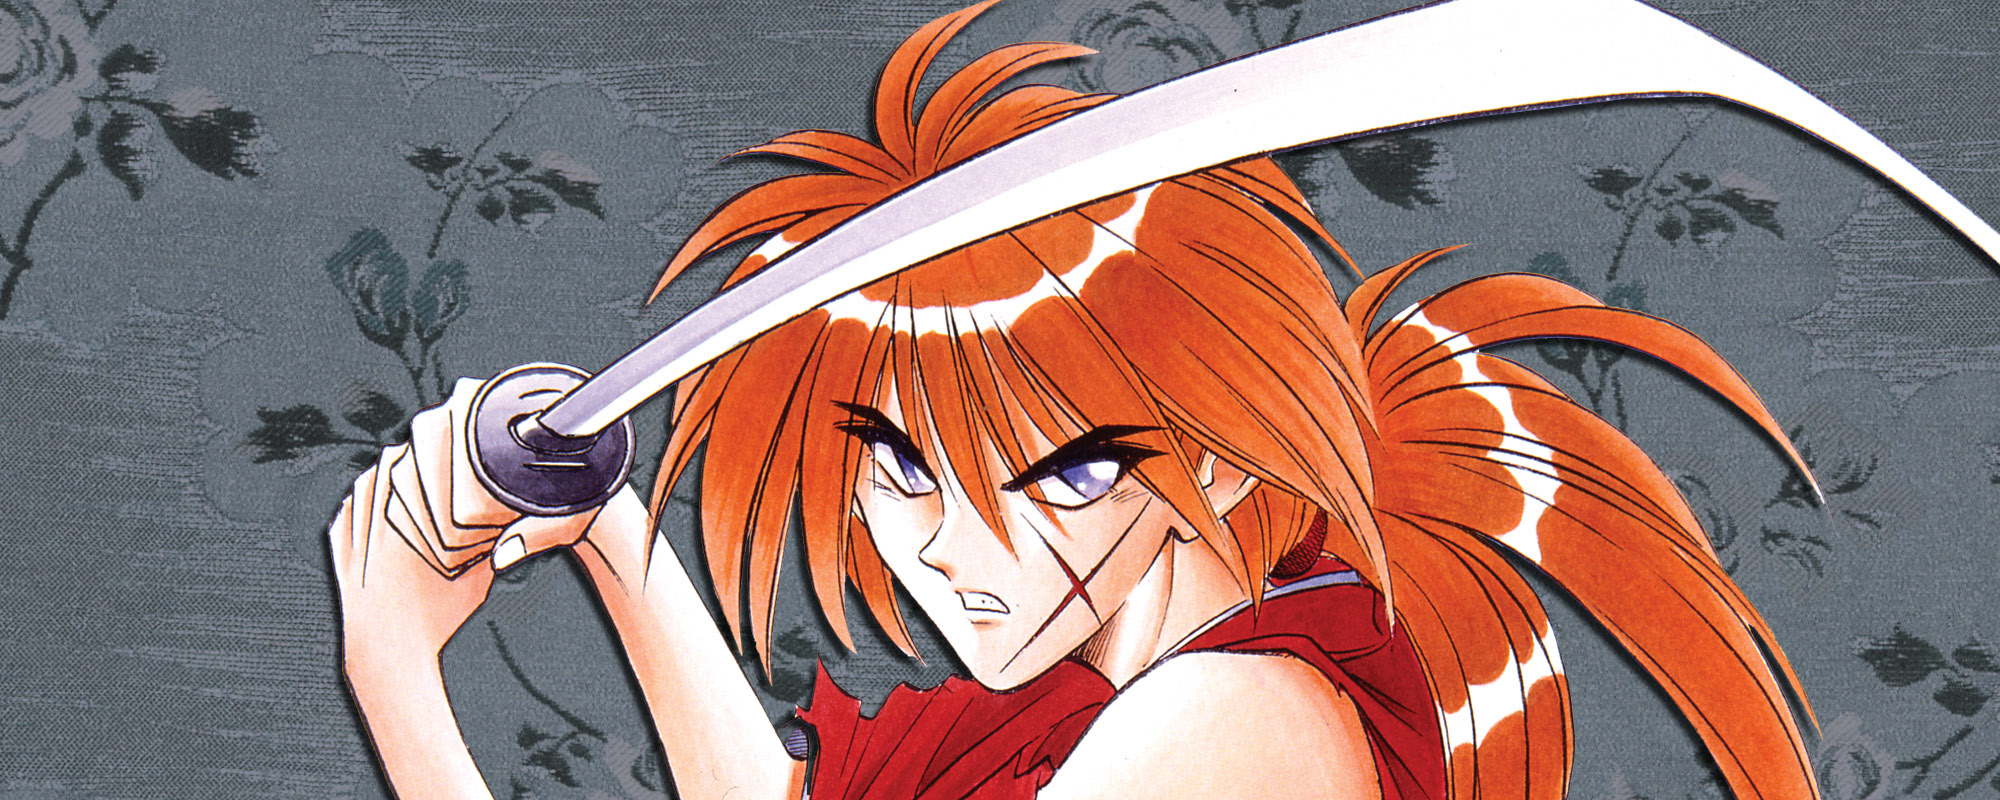 Sticker - Rurouni Kenshin - New Kenshin OVA Anime Toys Licensed ge55248 -  Walmart.com